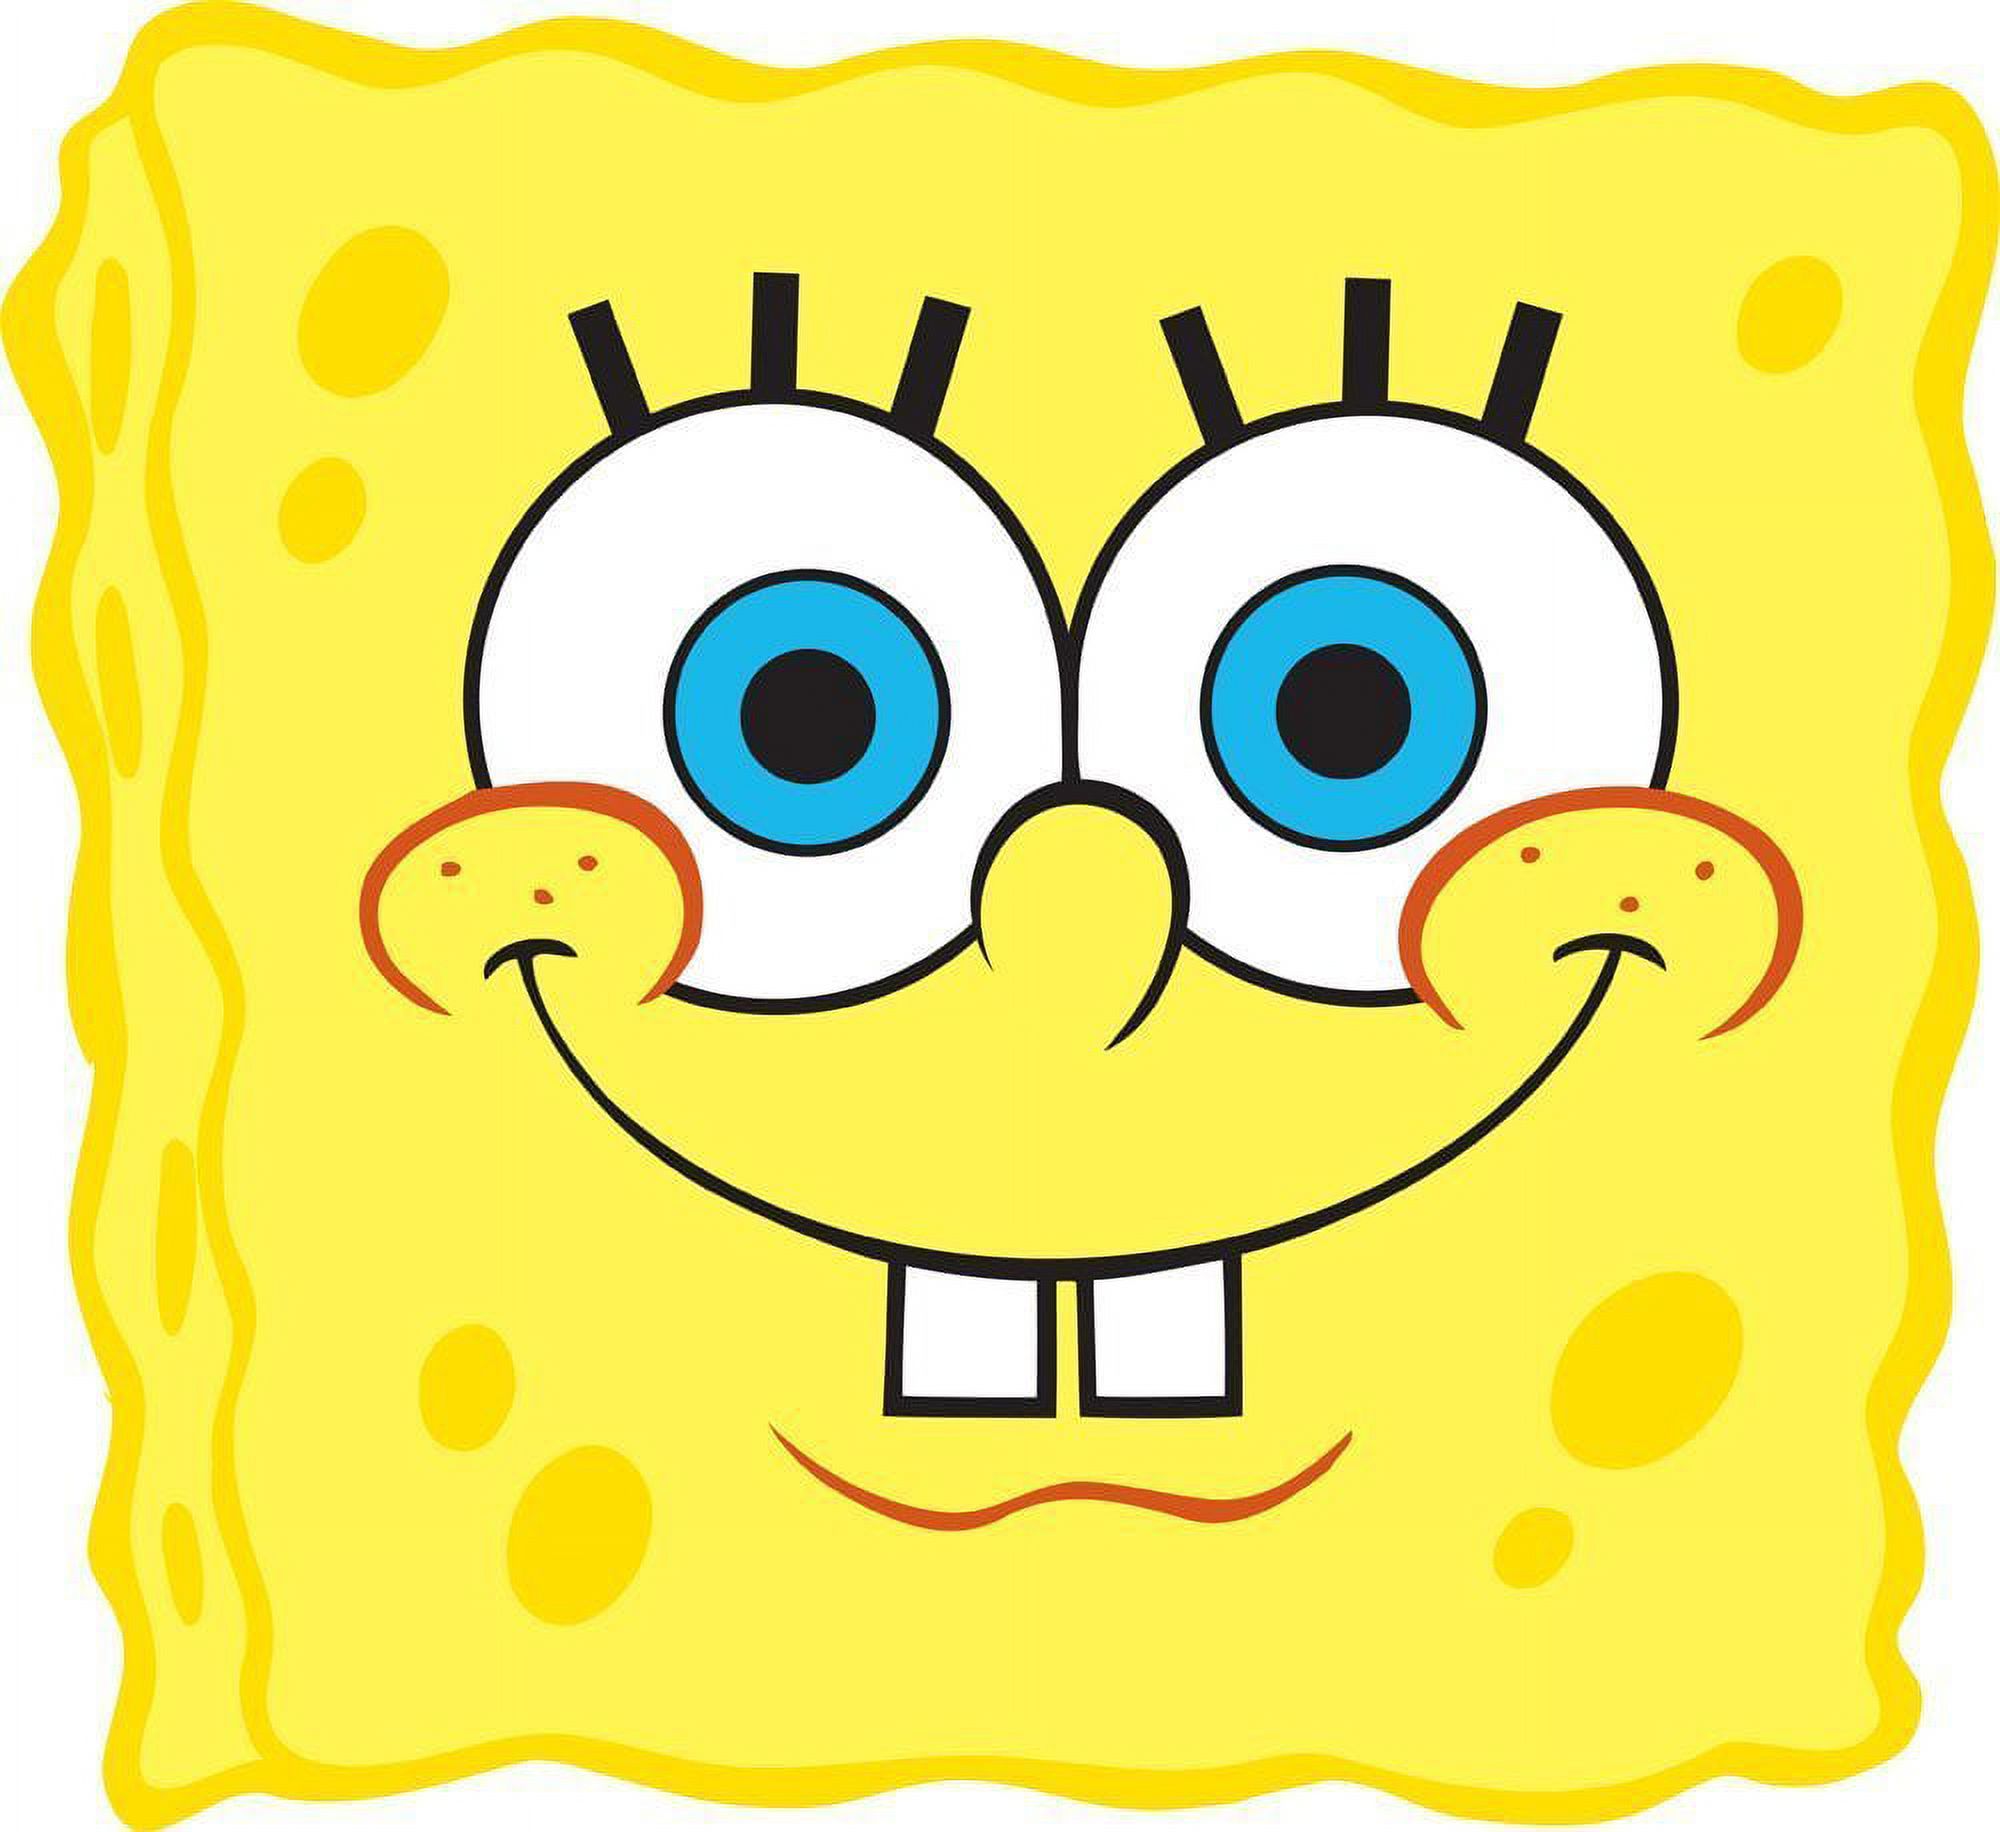 SpongeBob Sponge Face pillow - image 2 of 2